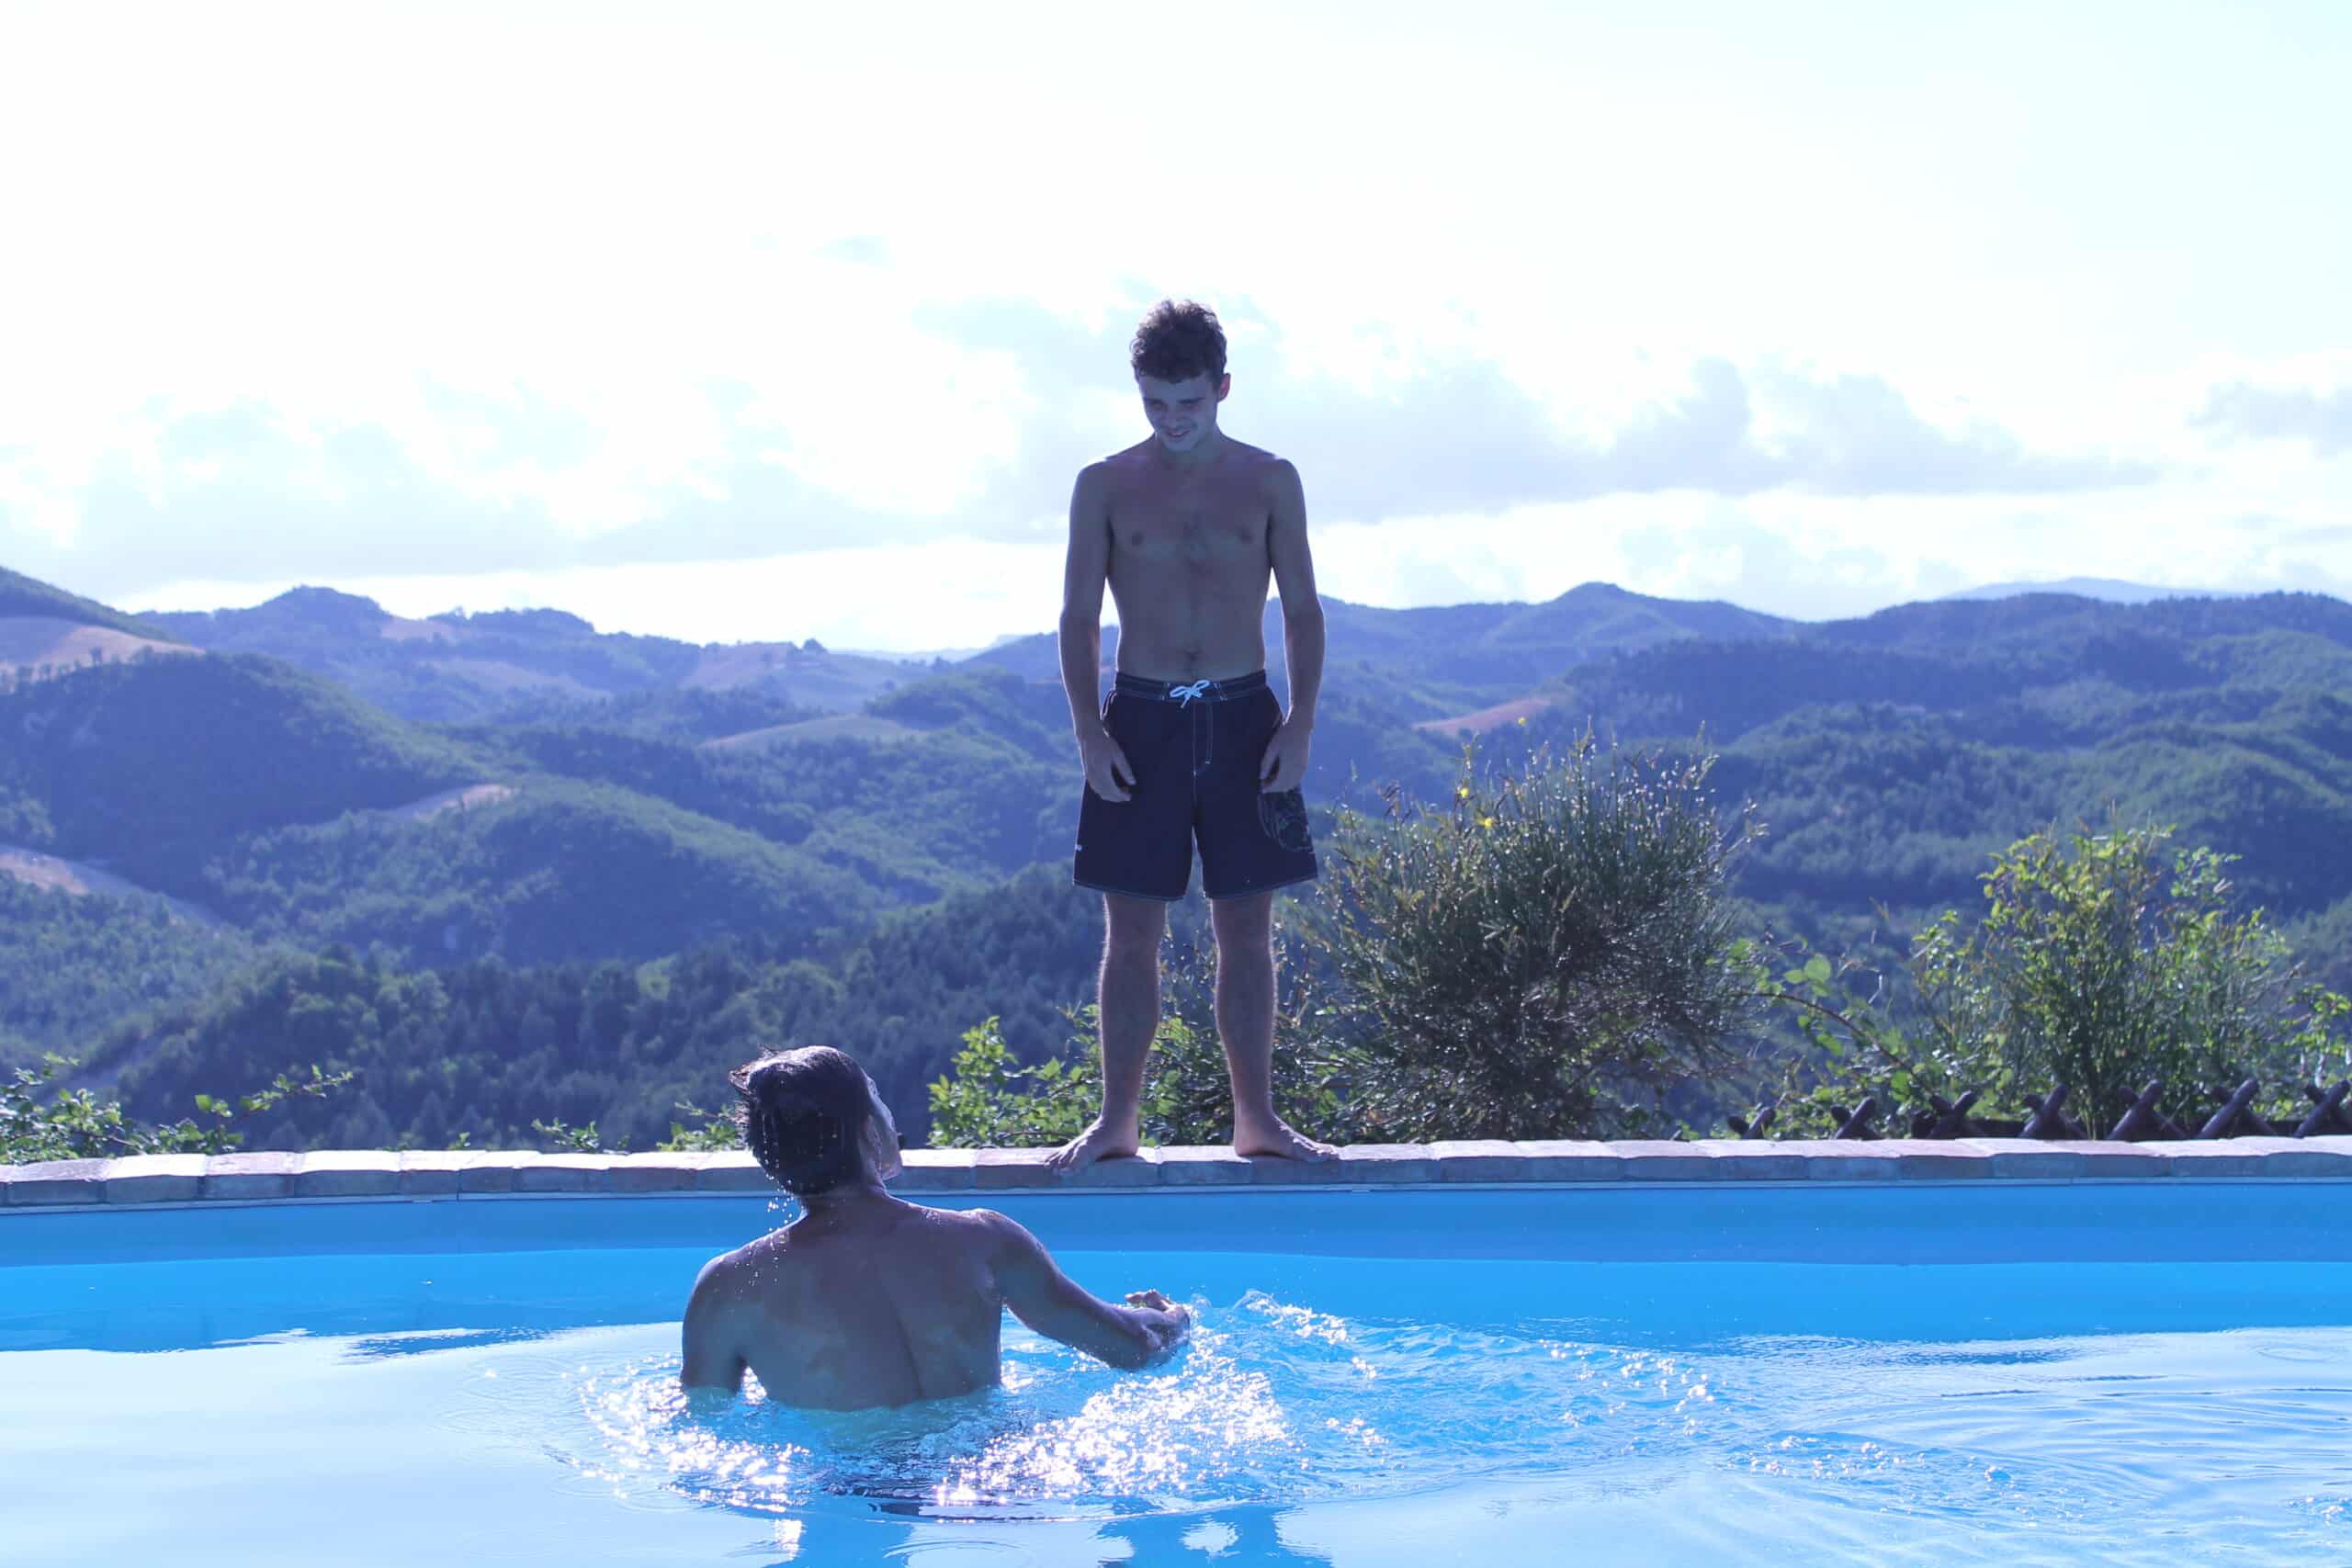 agriturismi Urbino, agriturismi Marche, casa vacanze Urbino, piscina panoramica, panorama mozzafiato, relax, casa vacanze con piscina Urbino